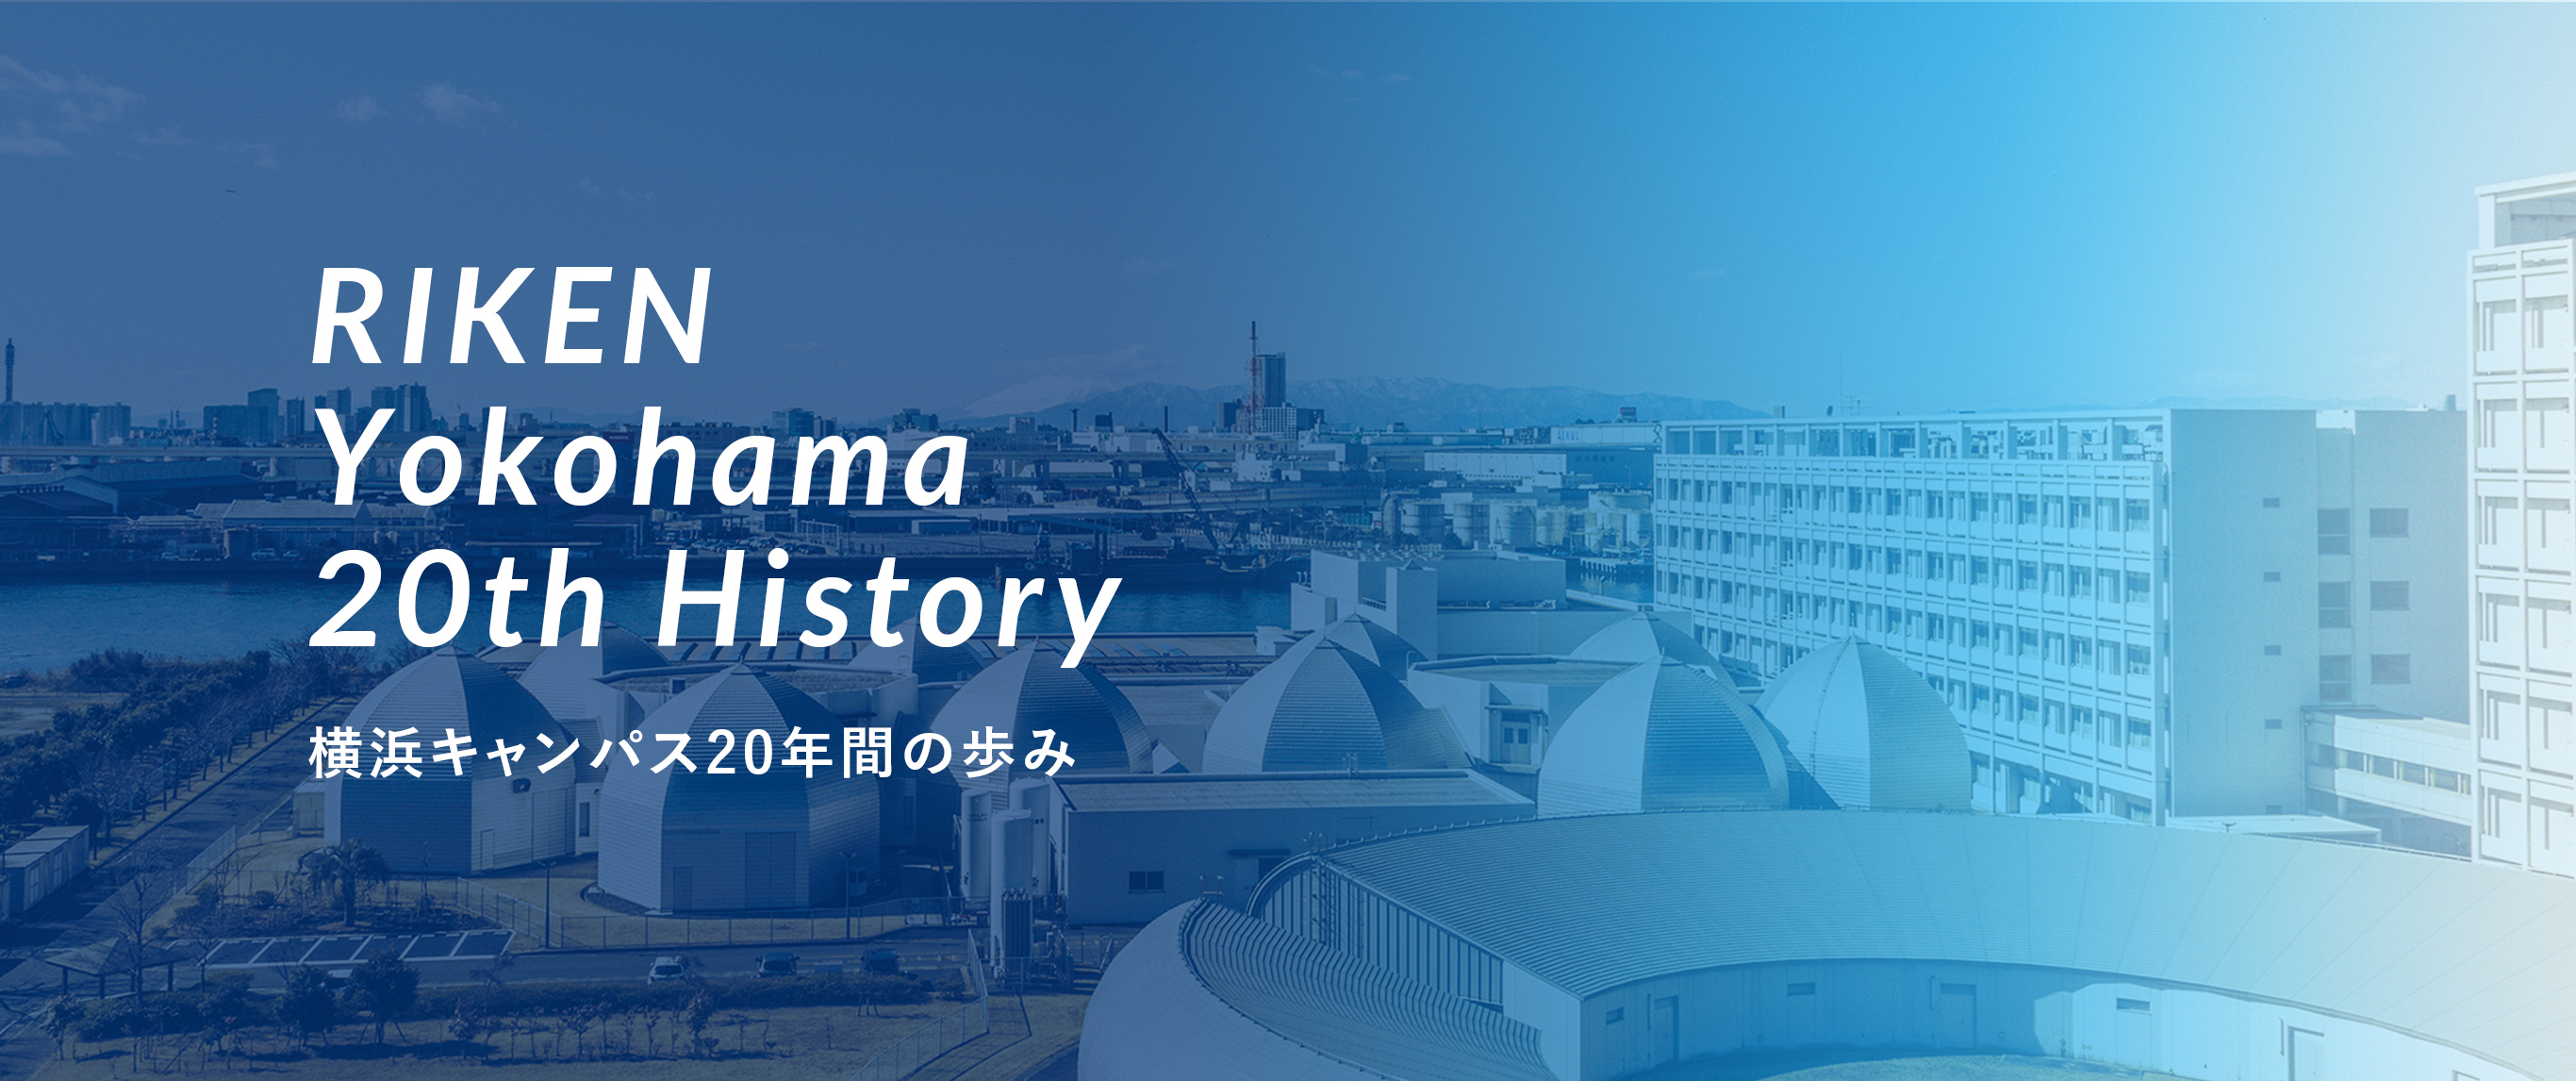 RIKEN Yokohama 20th History 横浜キャンパス20年間の歩み